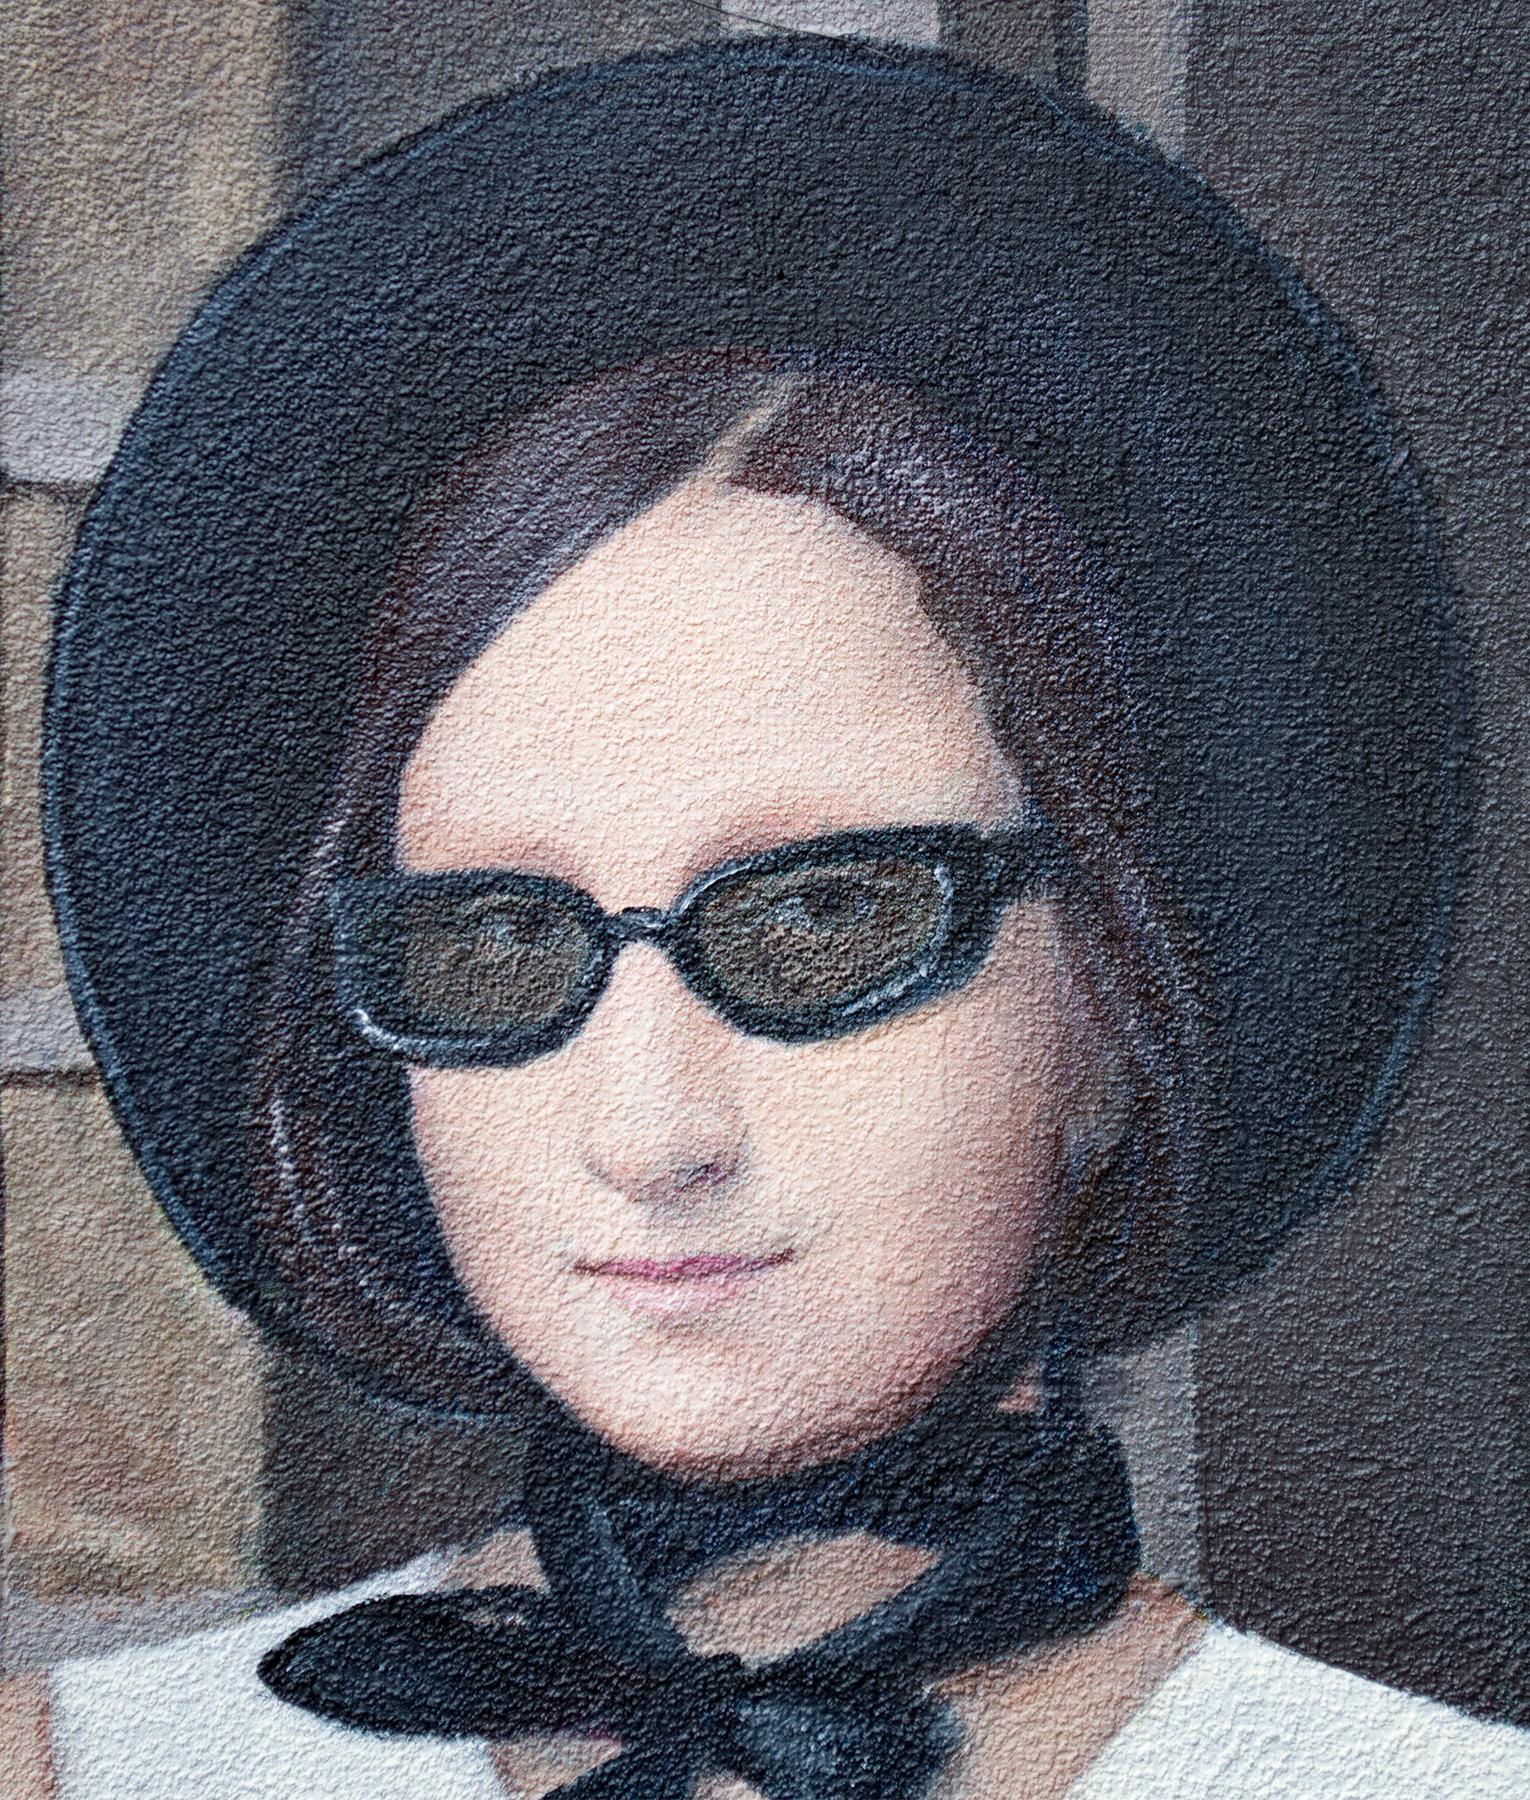 Contemporary portrait 